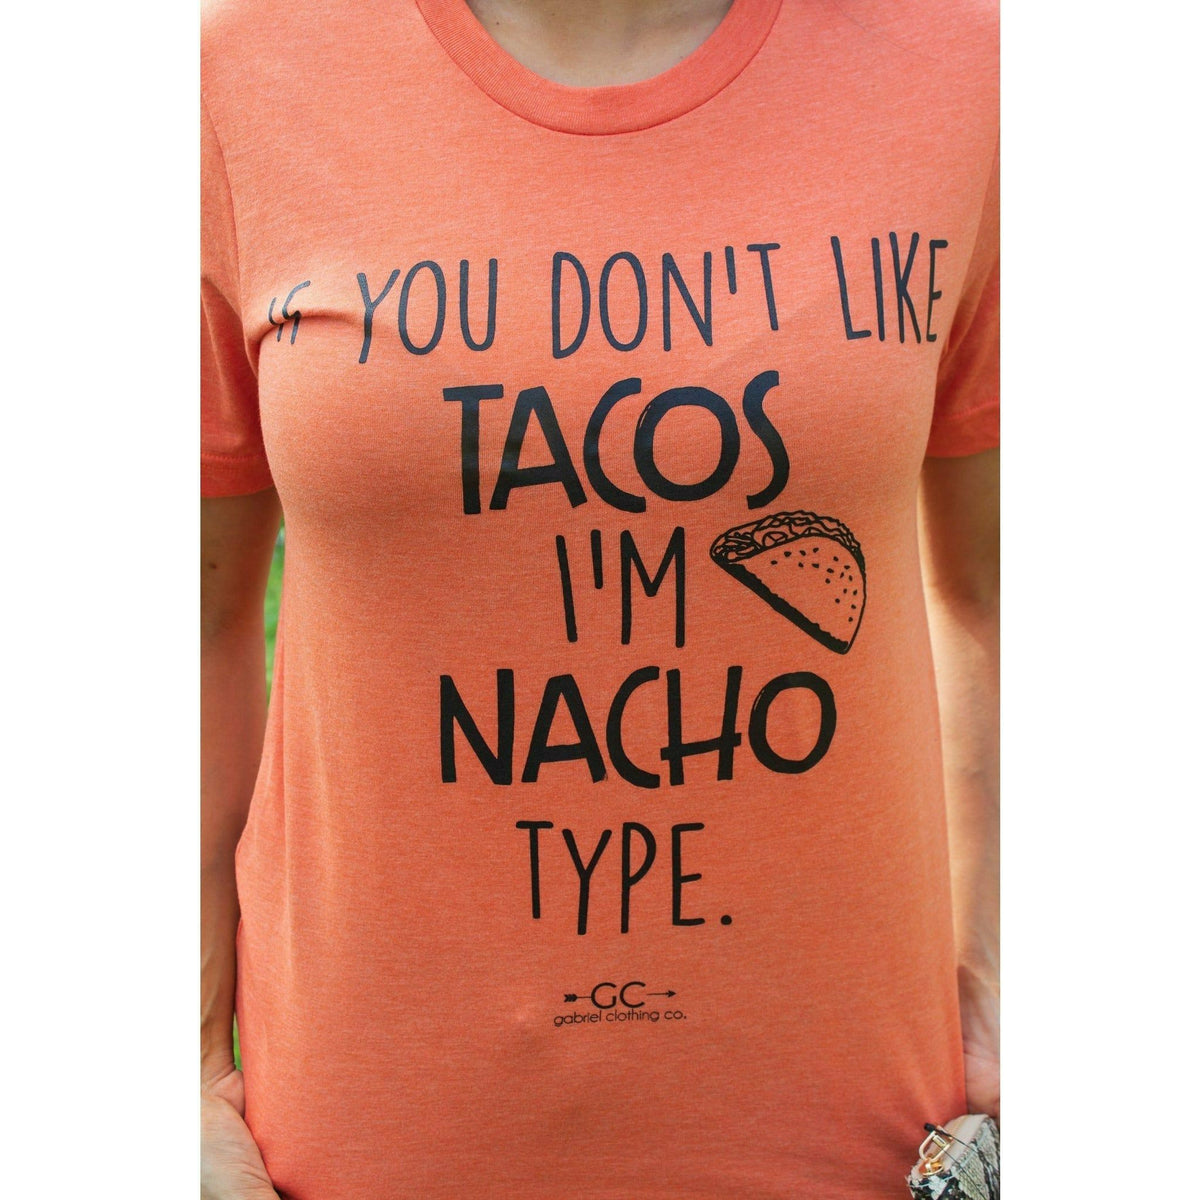 Nacho type tee or sweatshirt